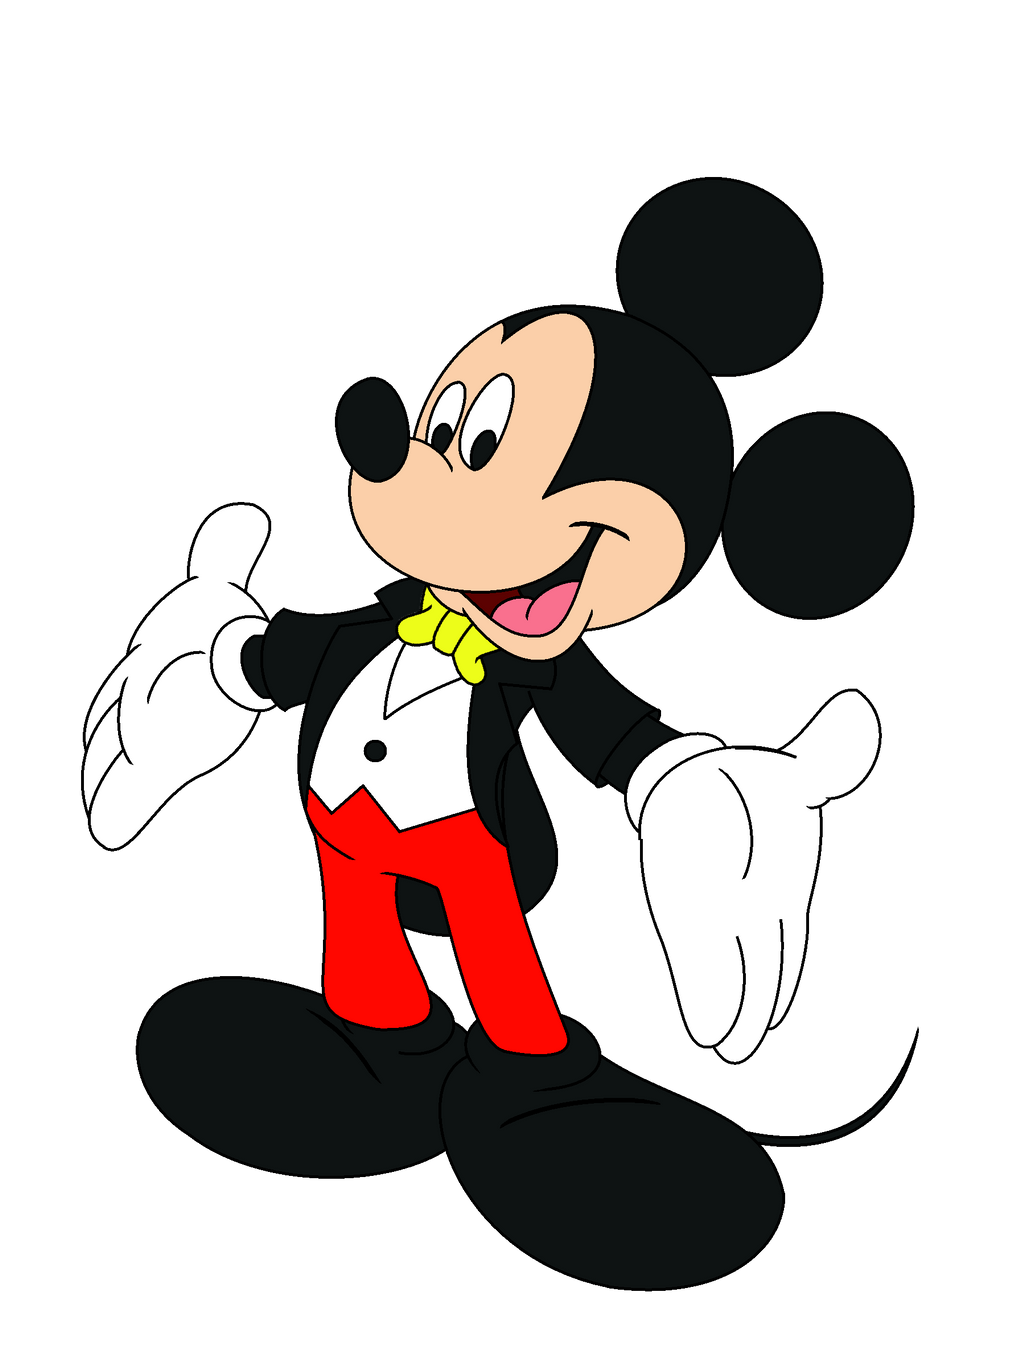 Mickey Mouse (Disneyland) by stephen718 on DeviantArt